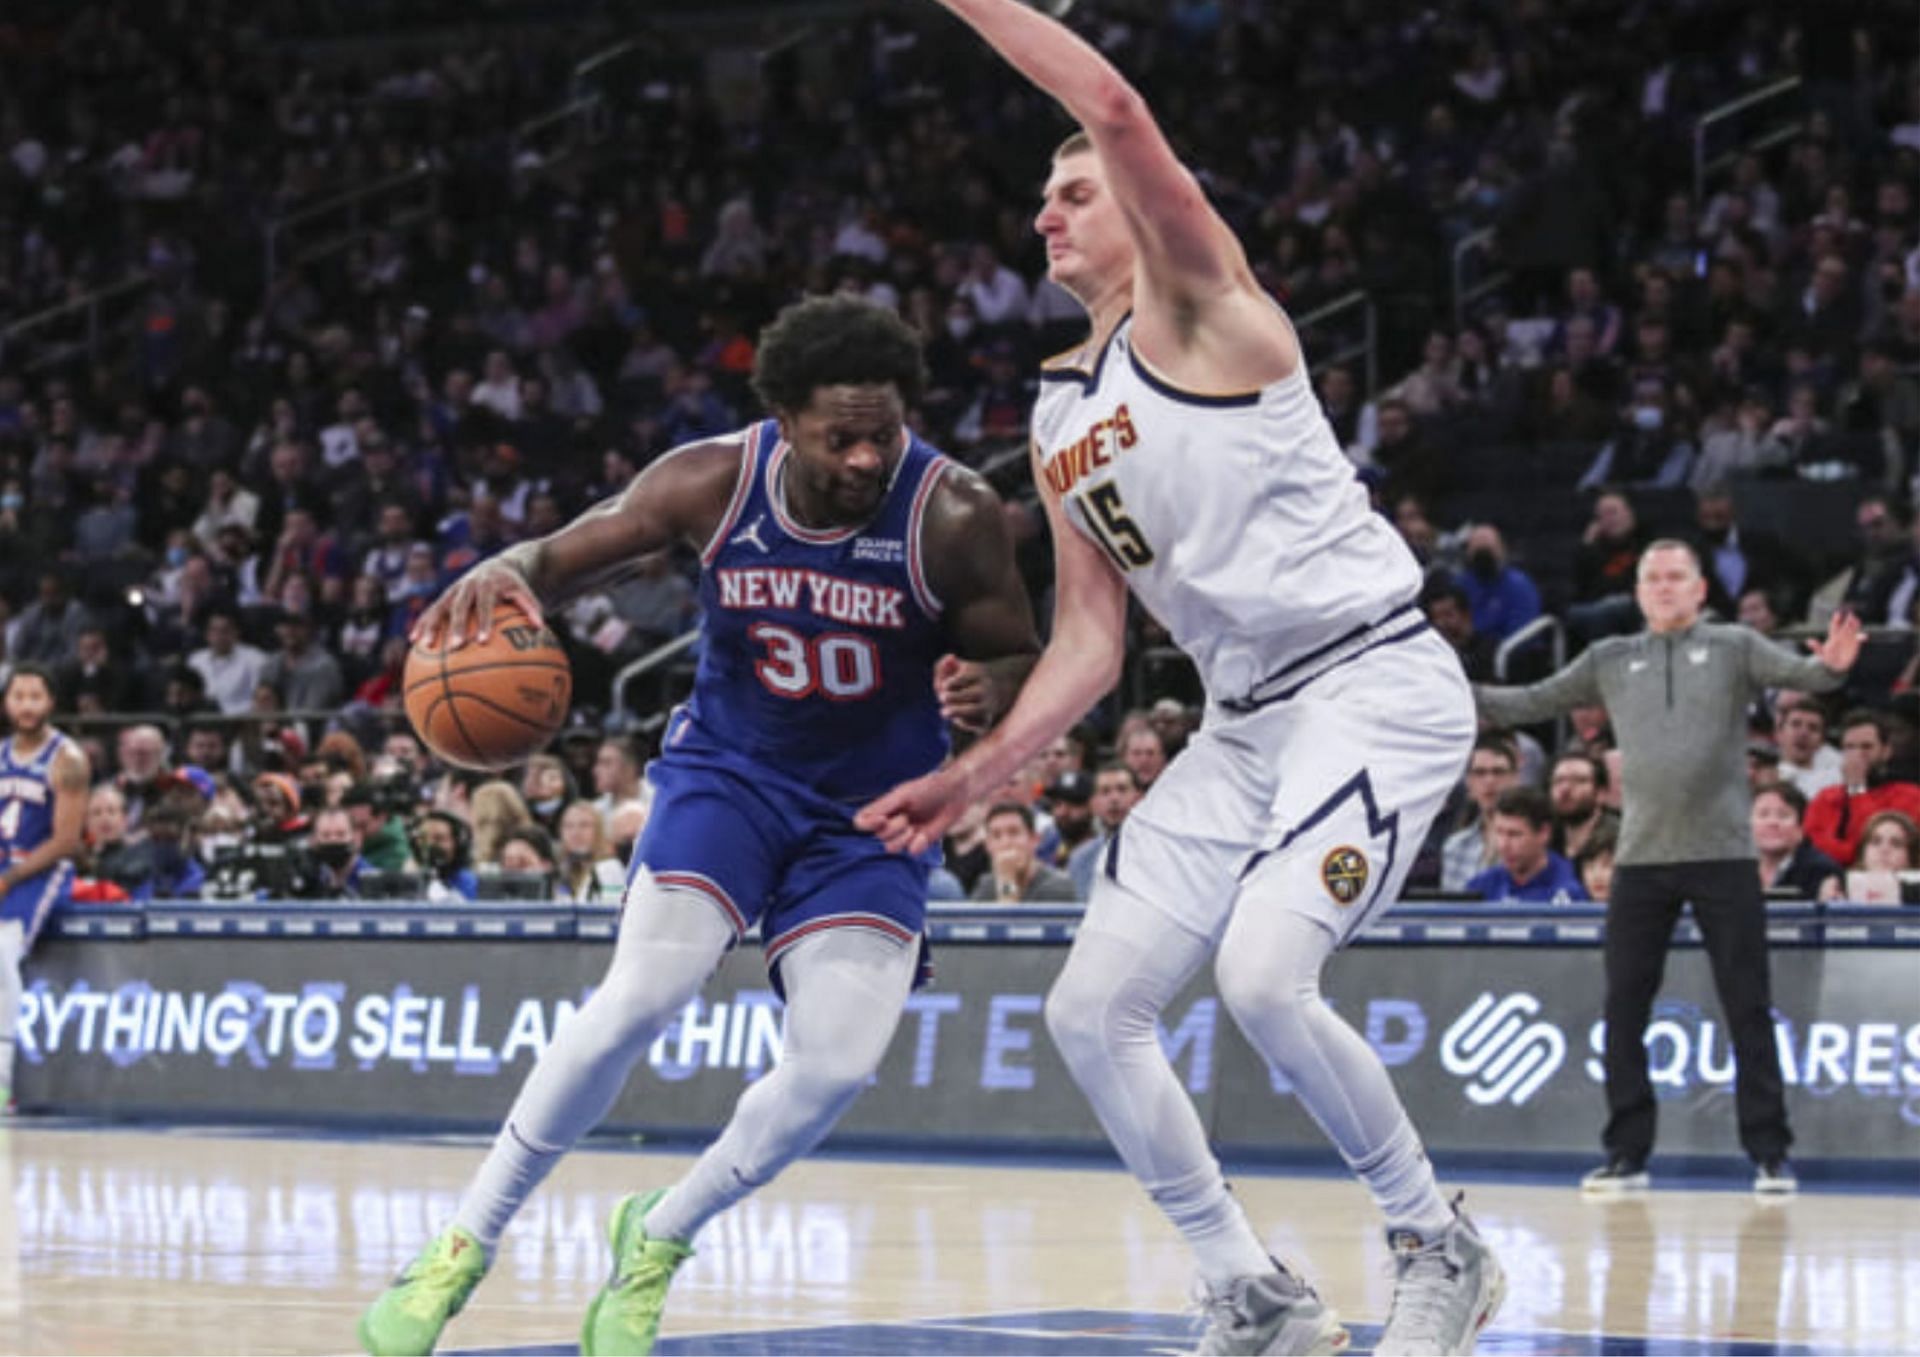 Nikola Jokic and the Denver Nuggets will take on the hosts New York Knicks at Madison Square Garden tonight. [photo: Empire Sports Media]